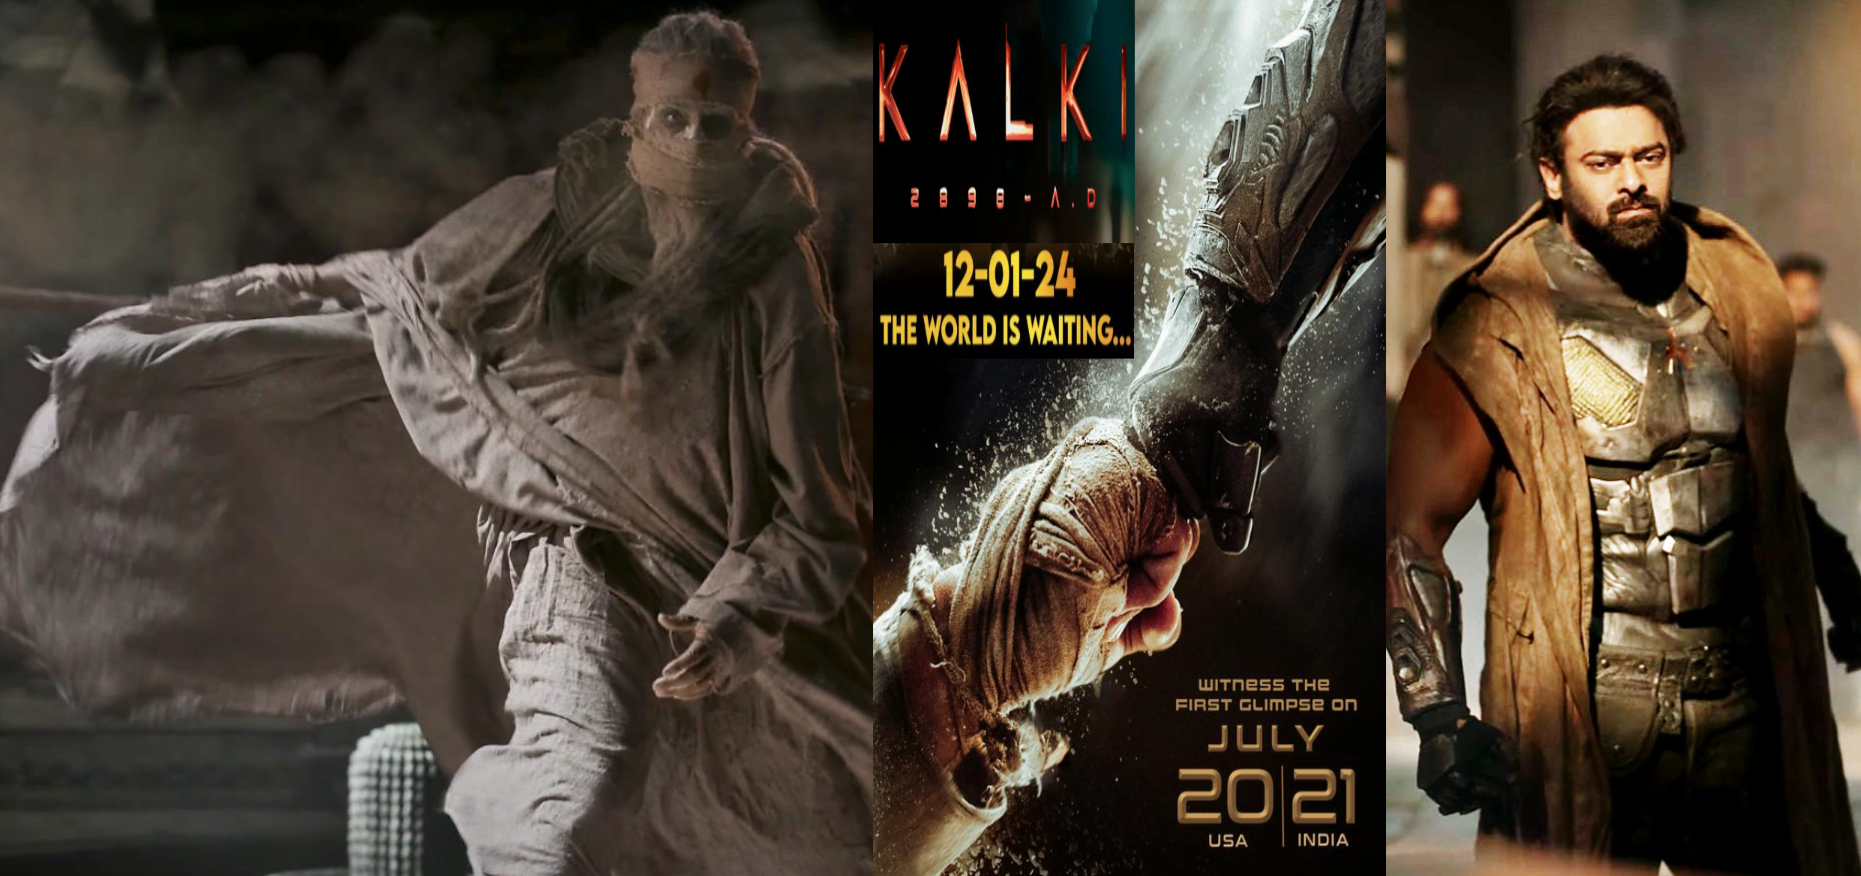 Kalki 2898 AD (Project K)